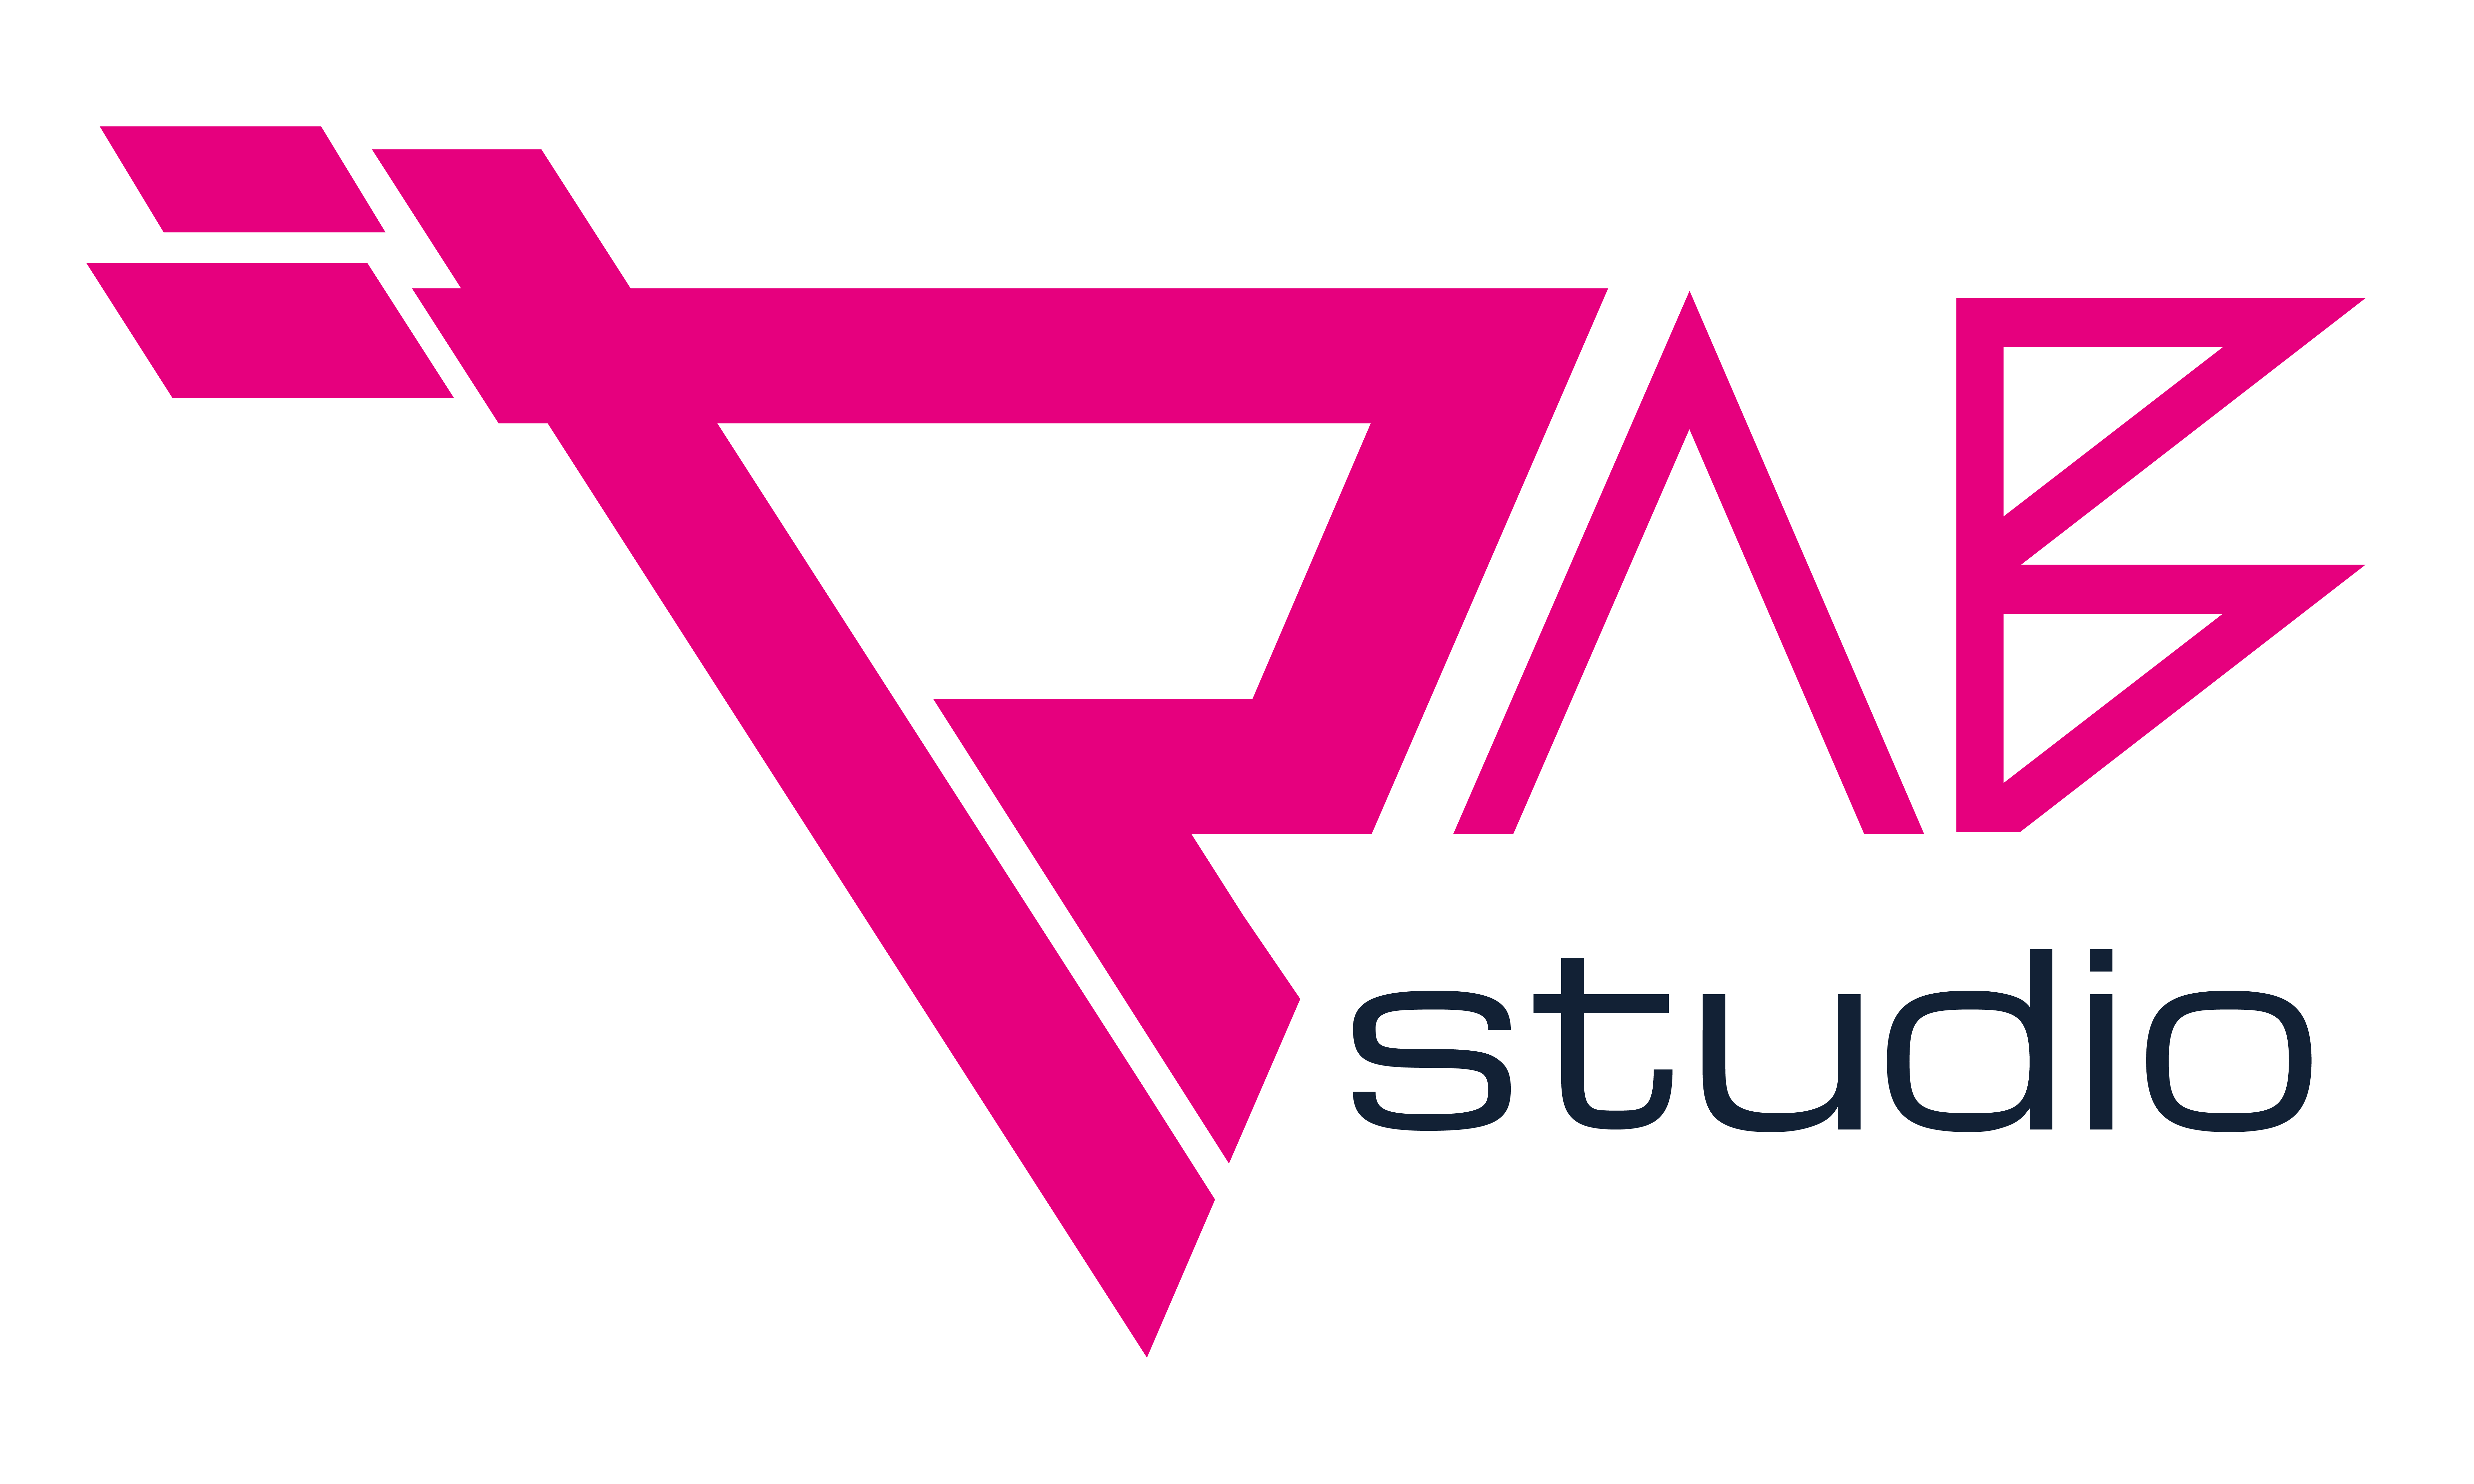 Pab studio logo lm